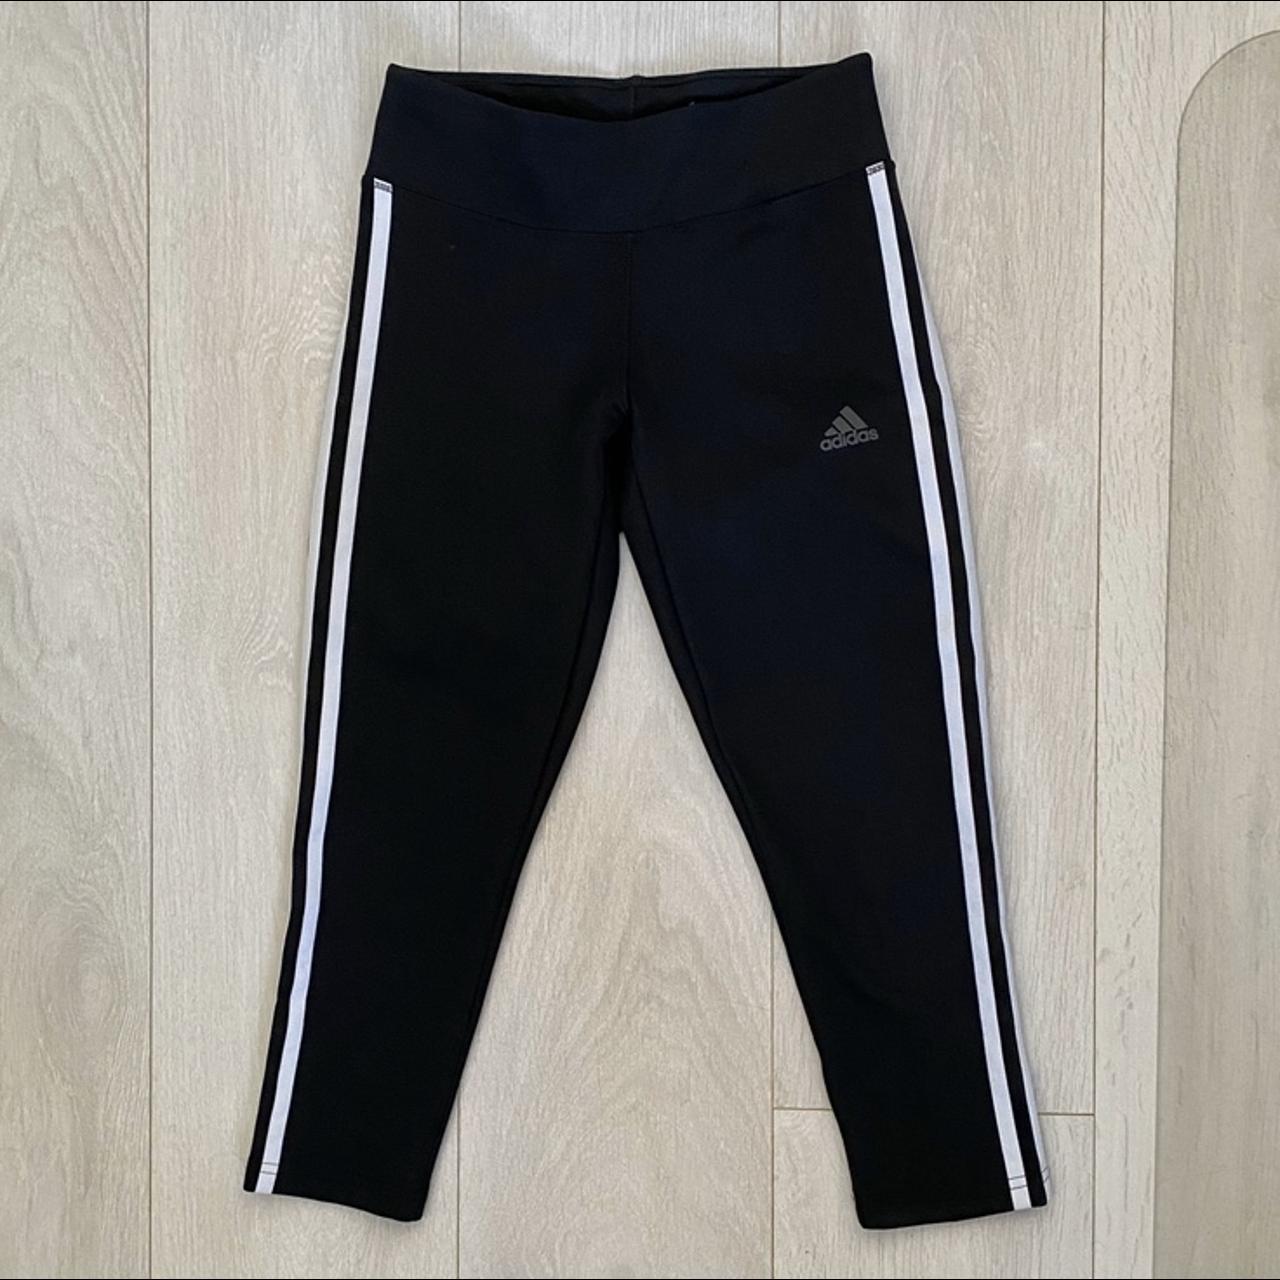 Adidas gym leggings 3/4 length Climalite Brand... - Depop